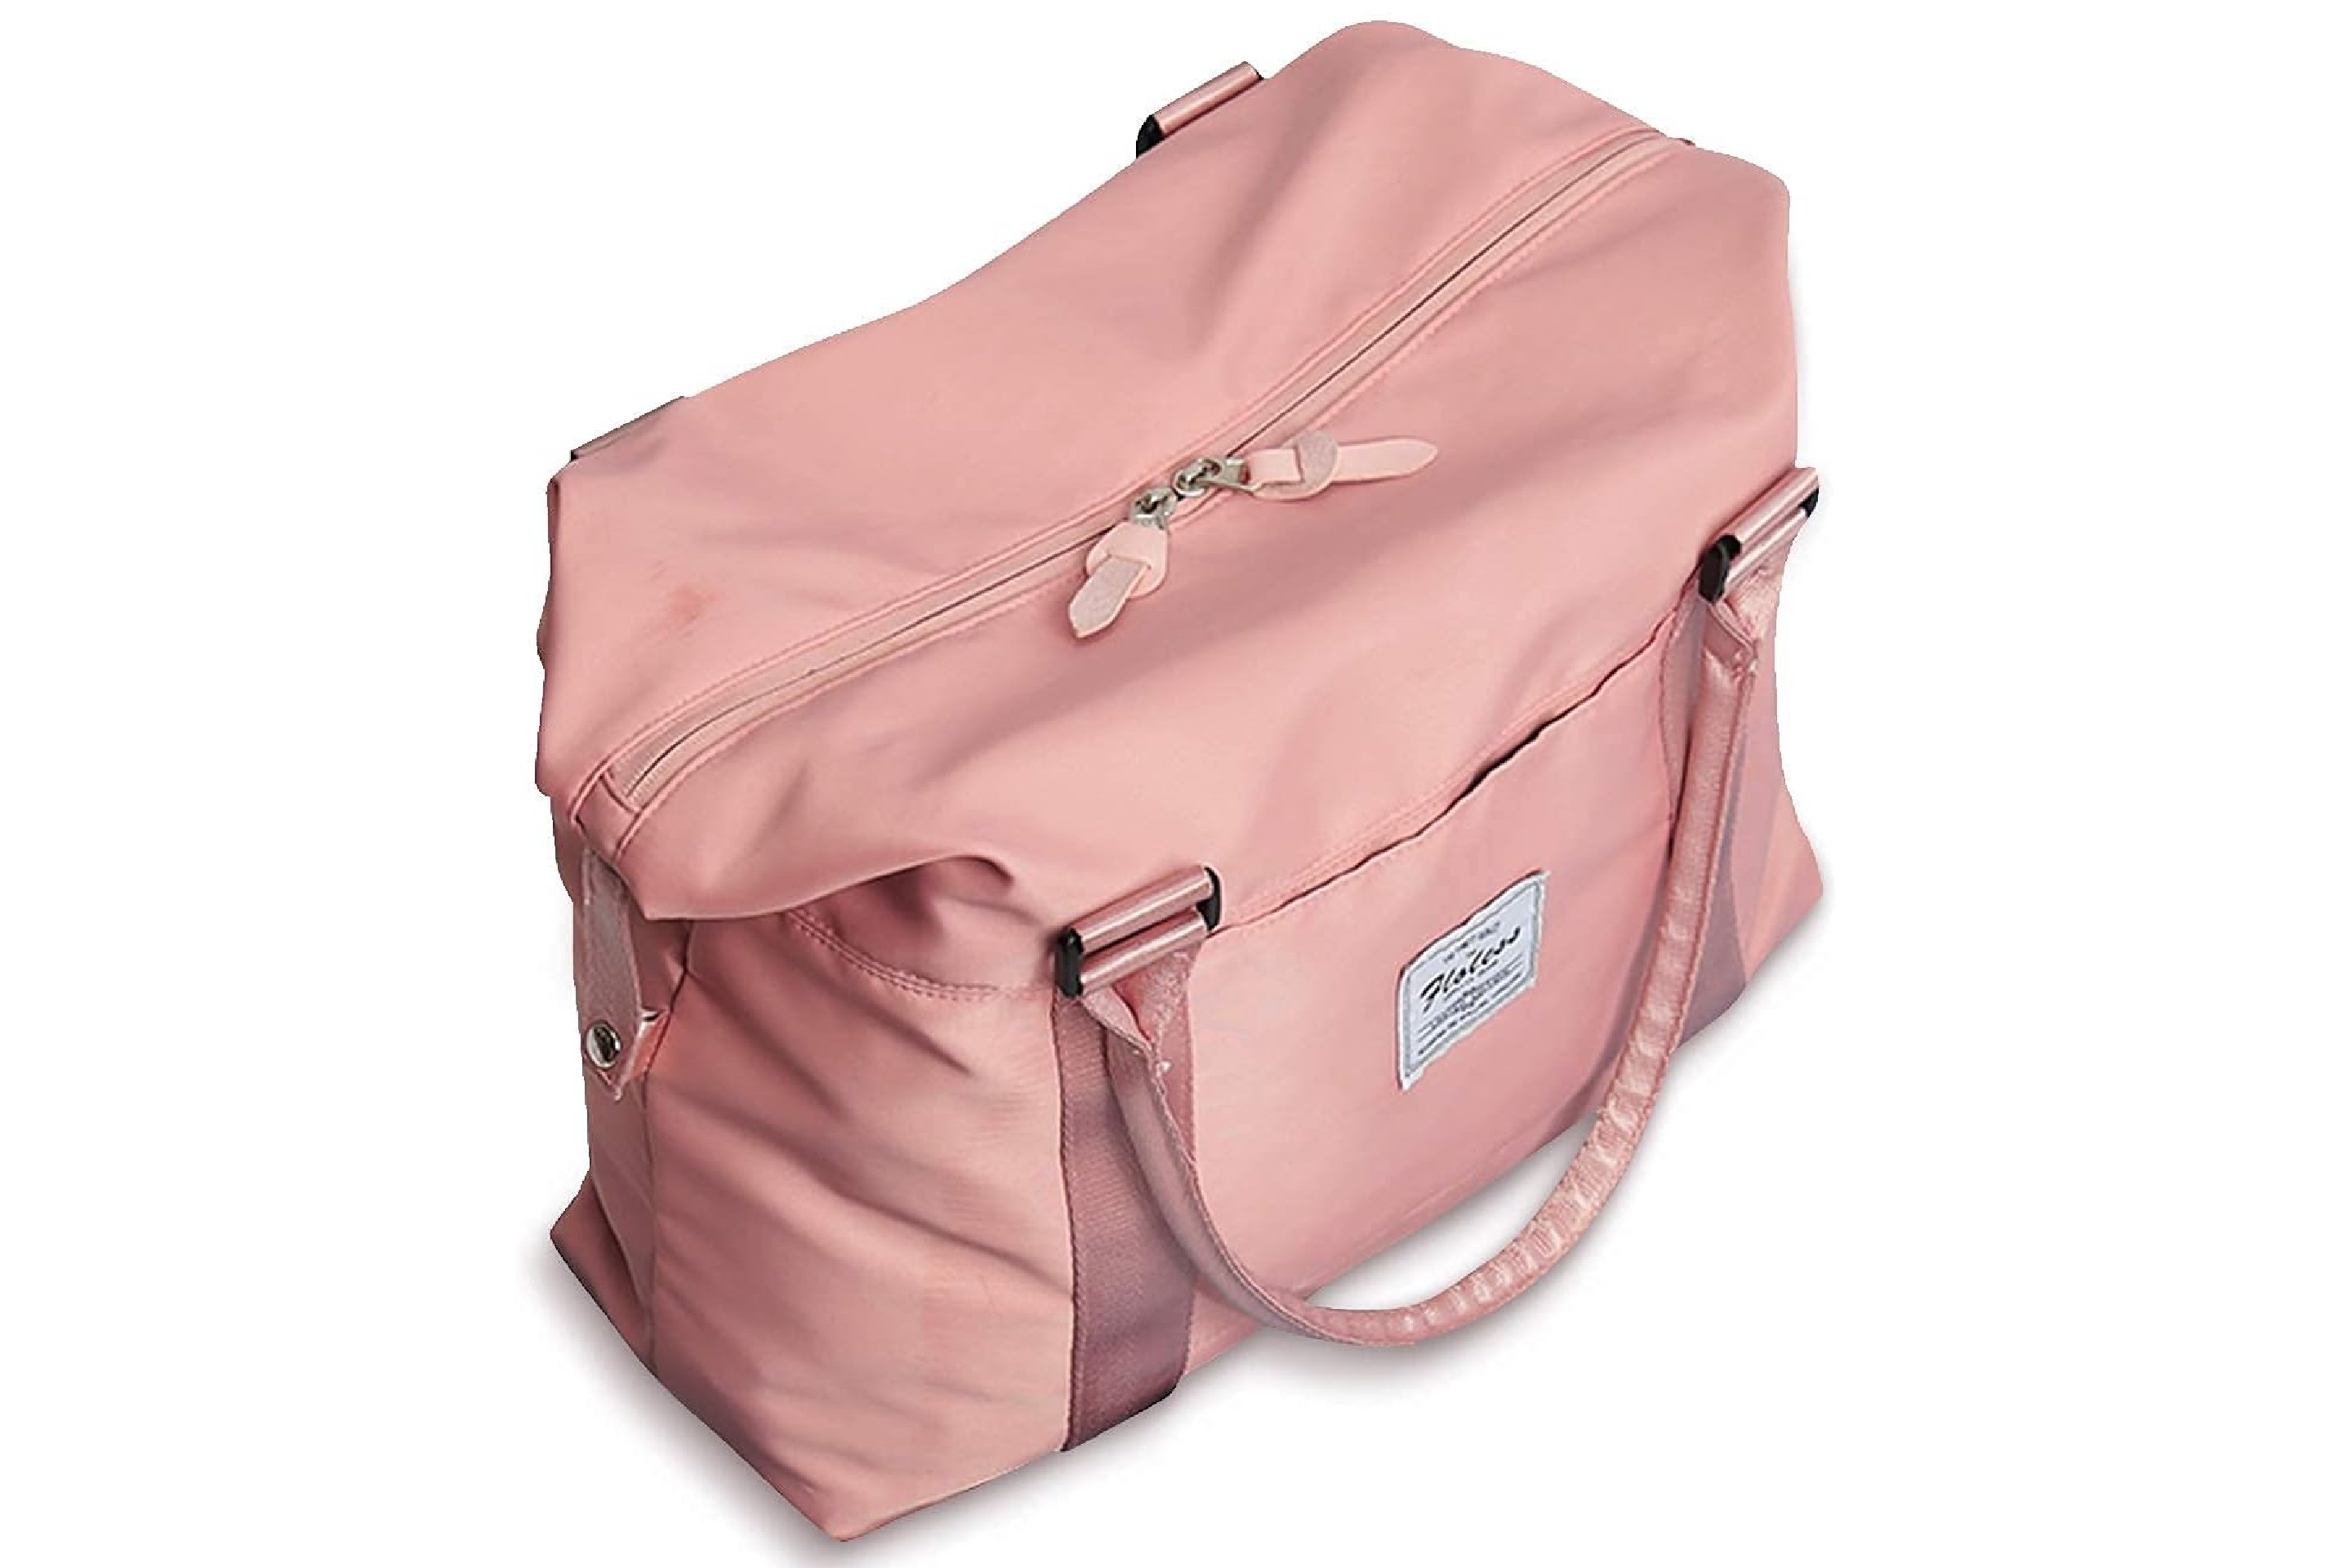 JLFS Women's Weekender Carry-On Duffel Bag